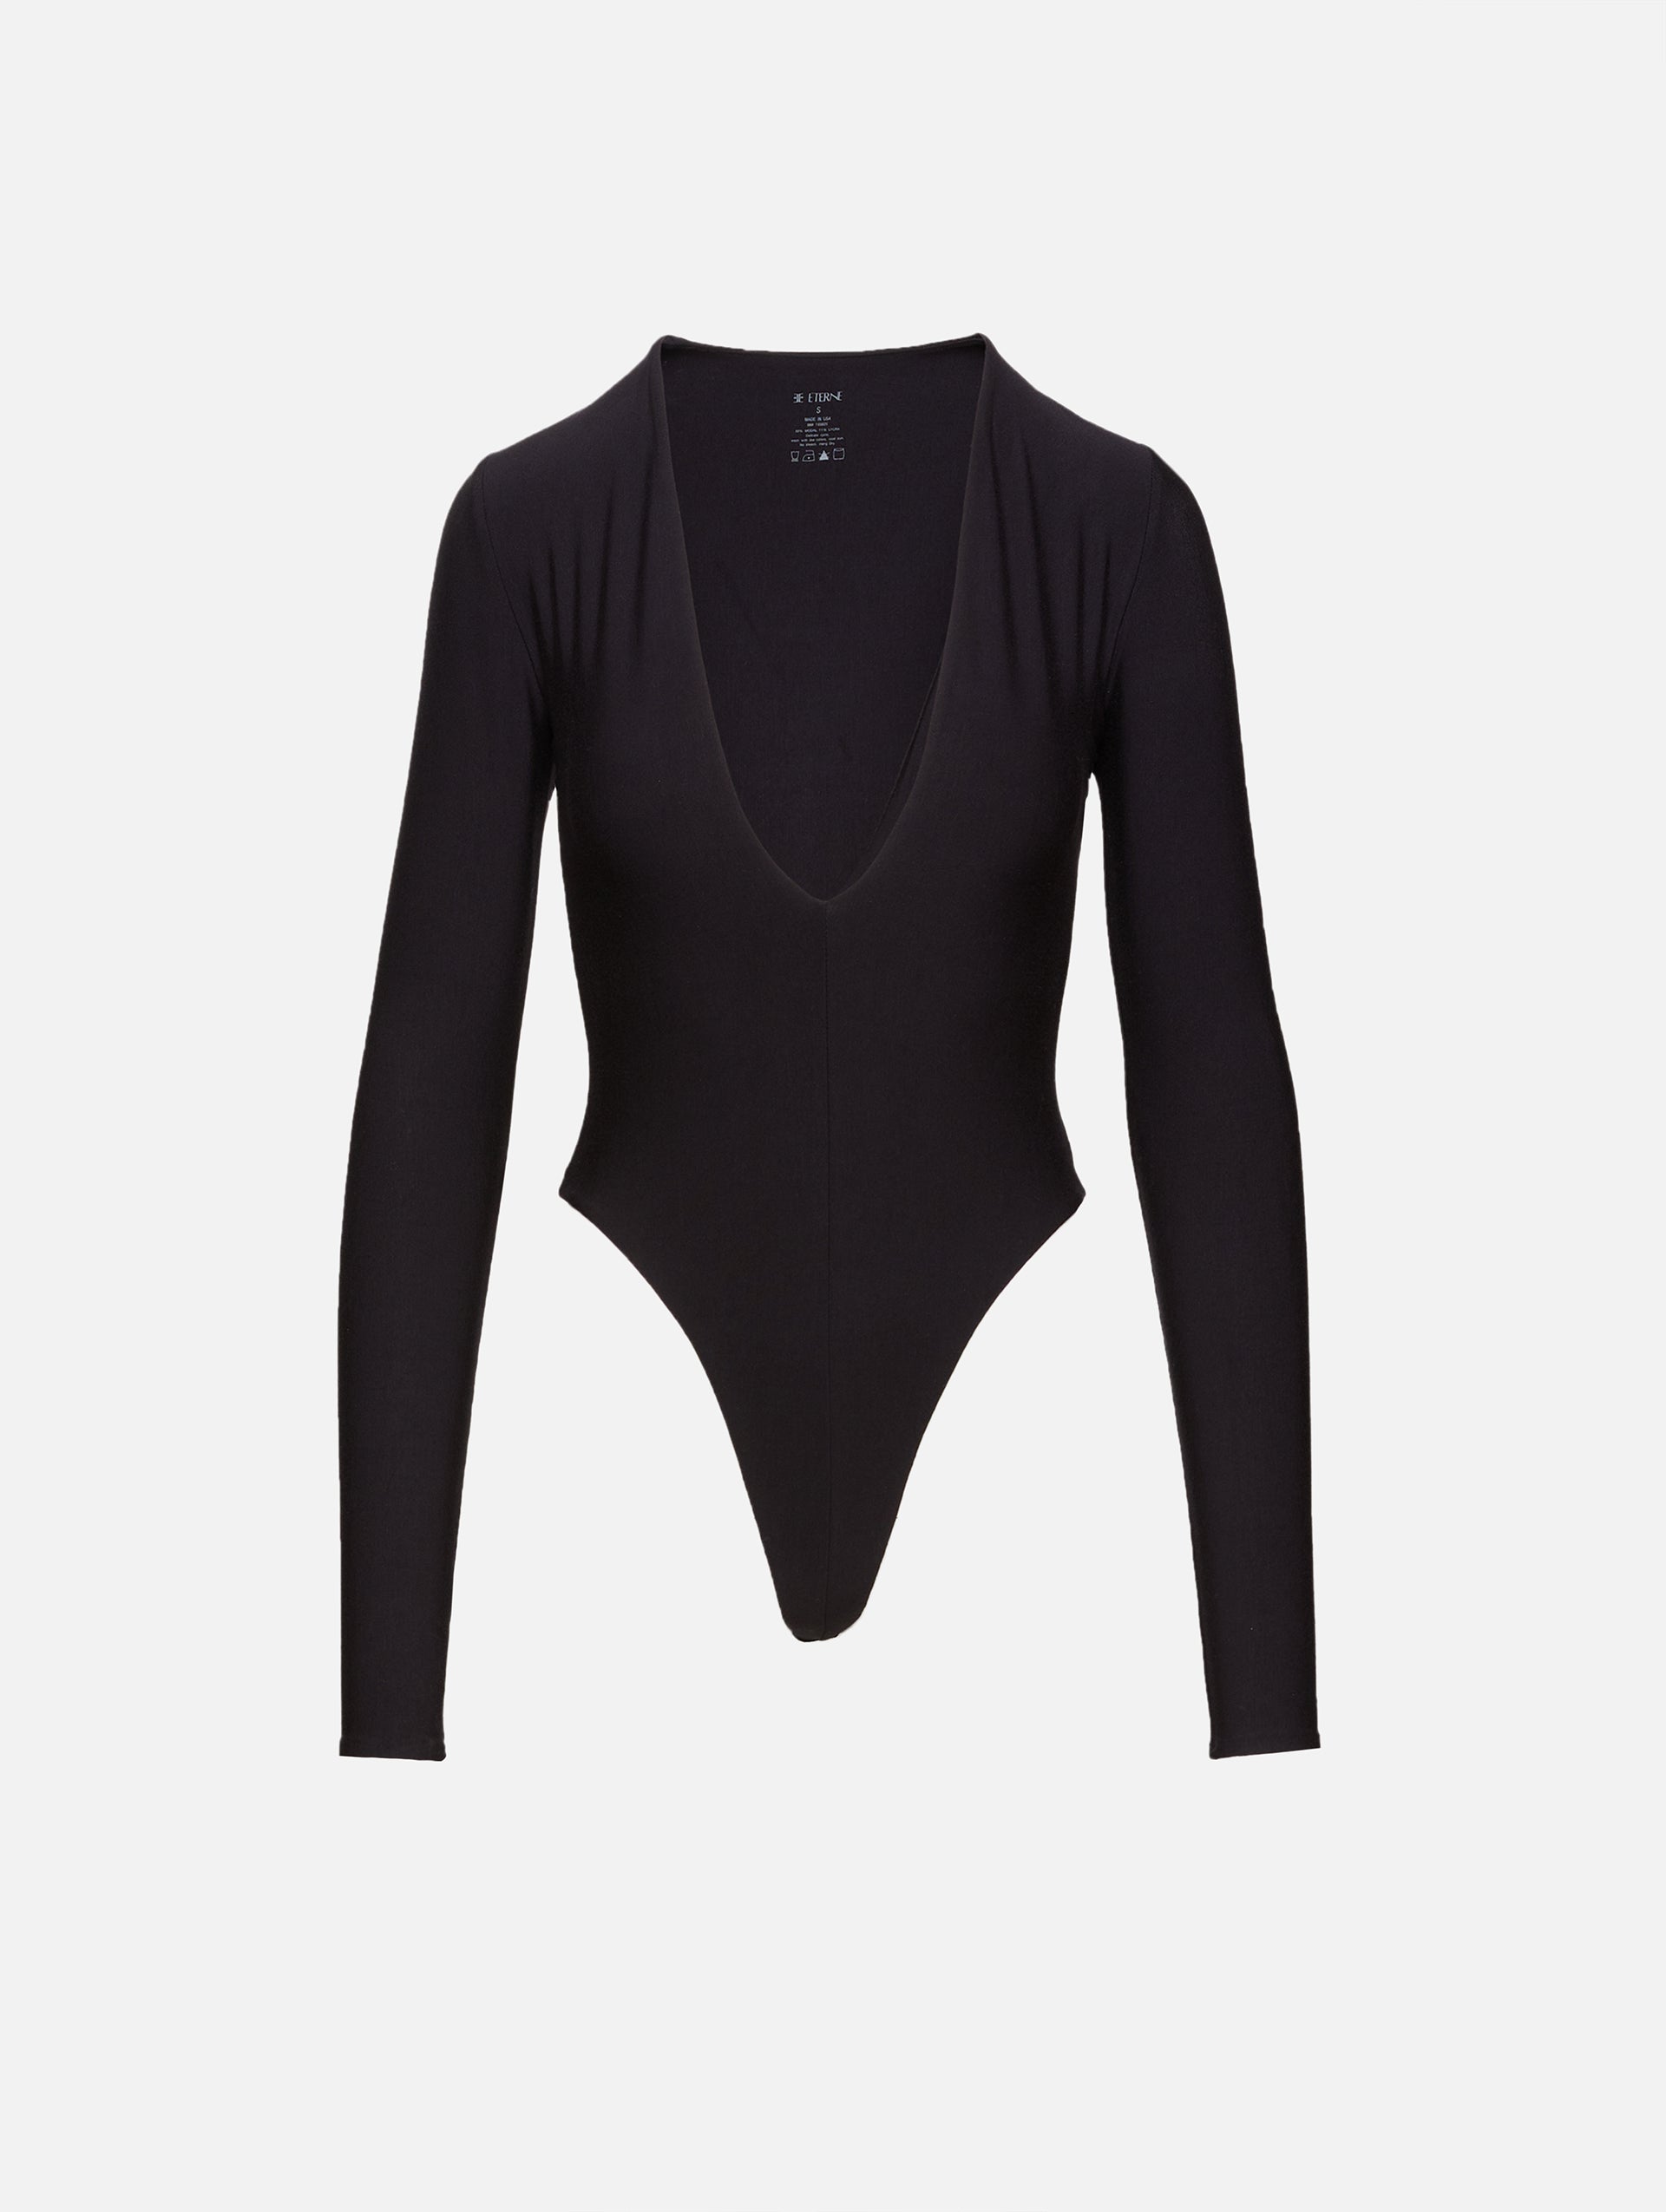 Ardelle black thong long sleeve deep plunge bodysuit - Depop